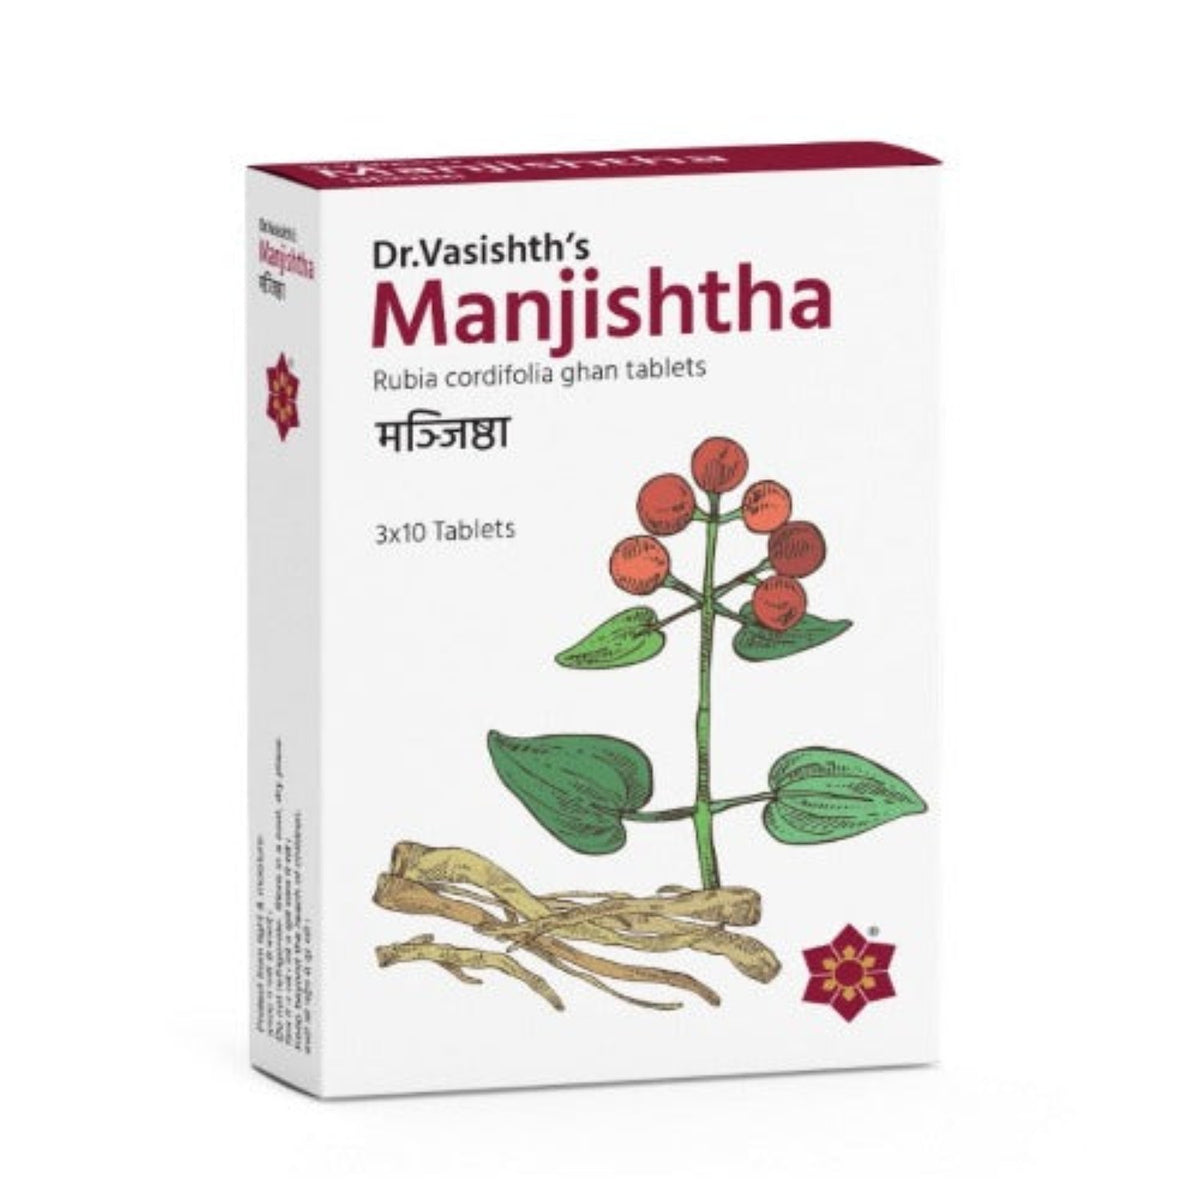 Dr.Vasishth's Ayurvedic Manjishtha 3 X 10 Tablets